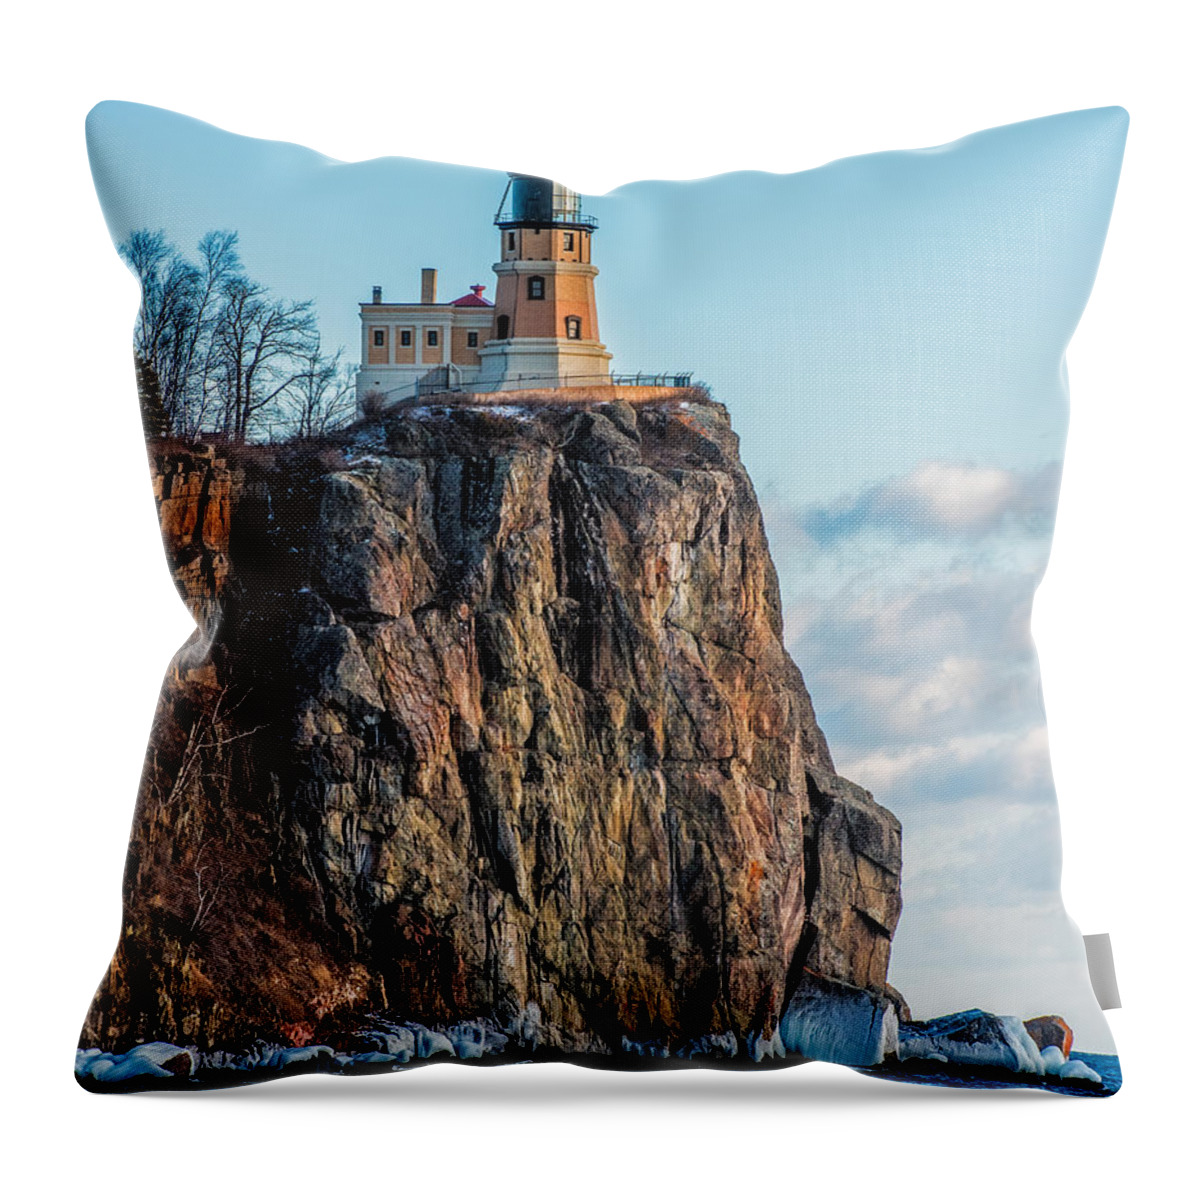 Split Rock Lighthouse Throw Pillow featuring the photograph Split Rock Lighthouse In Winter by Paul Freidlund